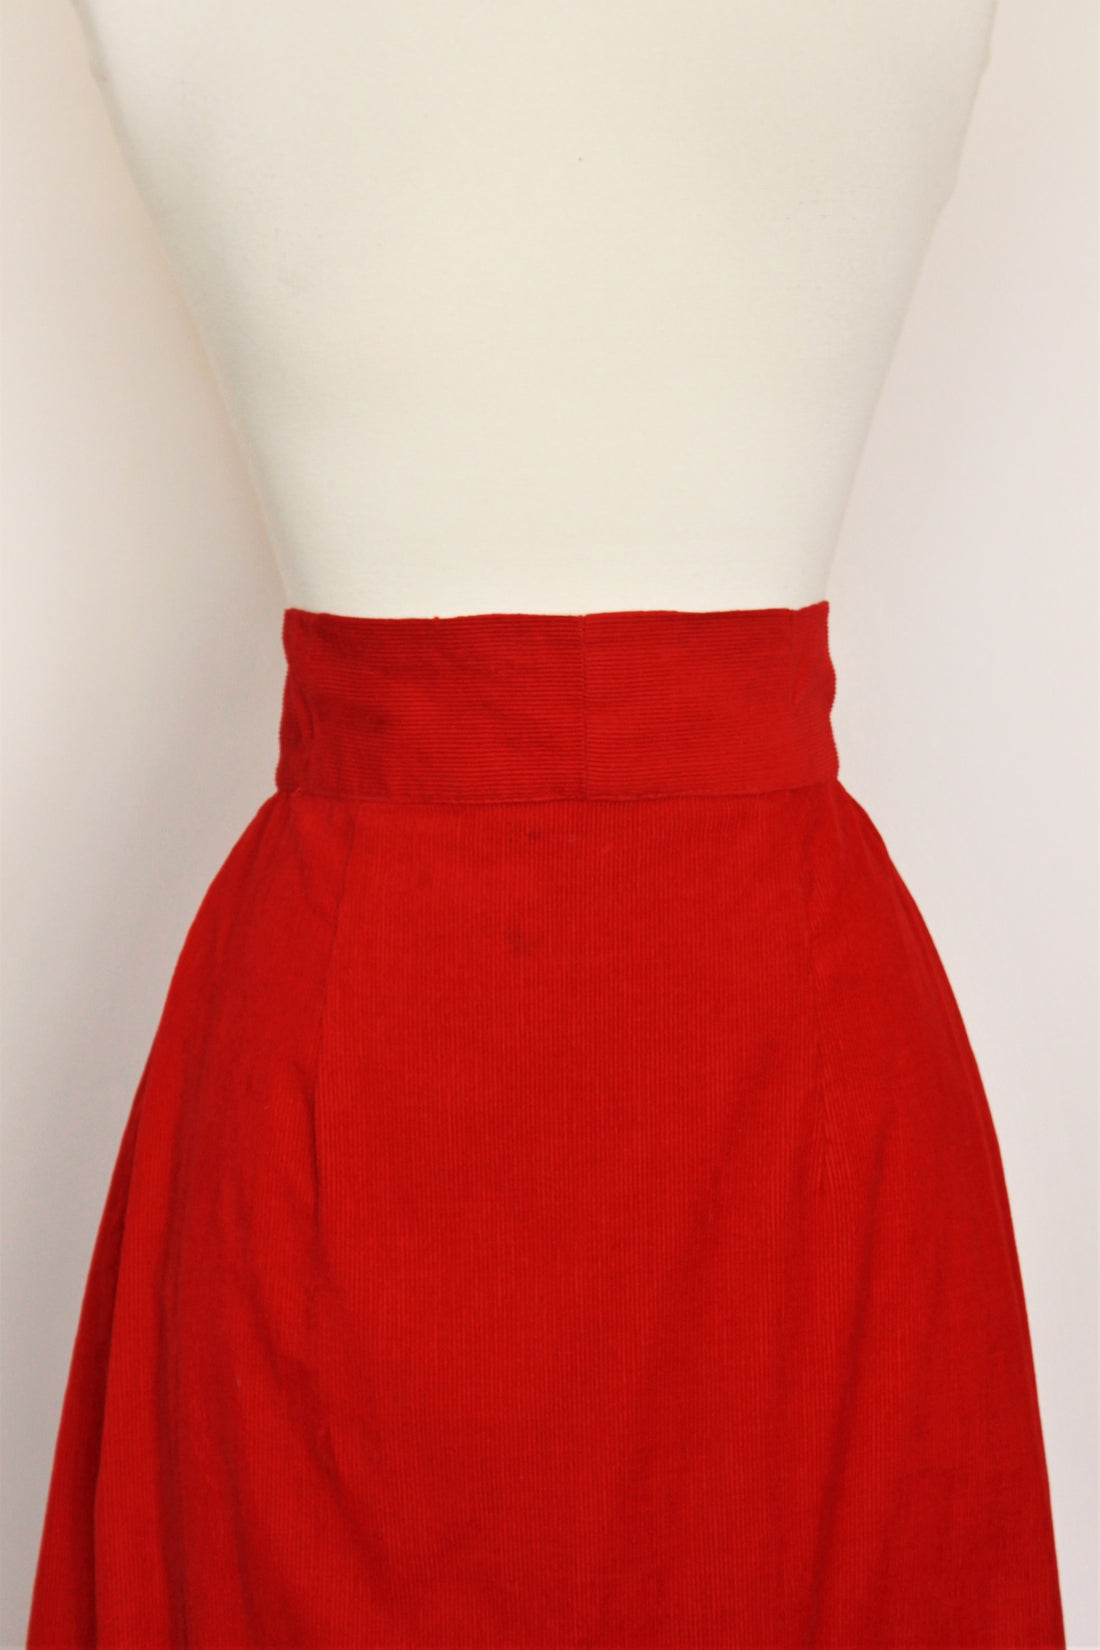 Vintage 1940s Does 1900s Red Corduroy Skirt – Toadstool Farm Vintage